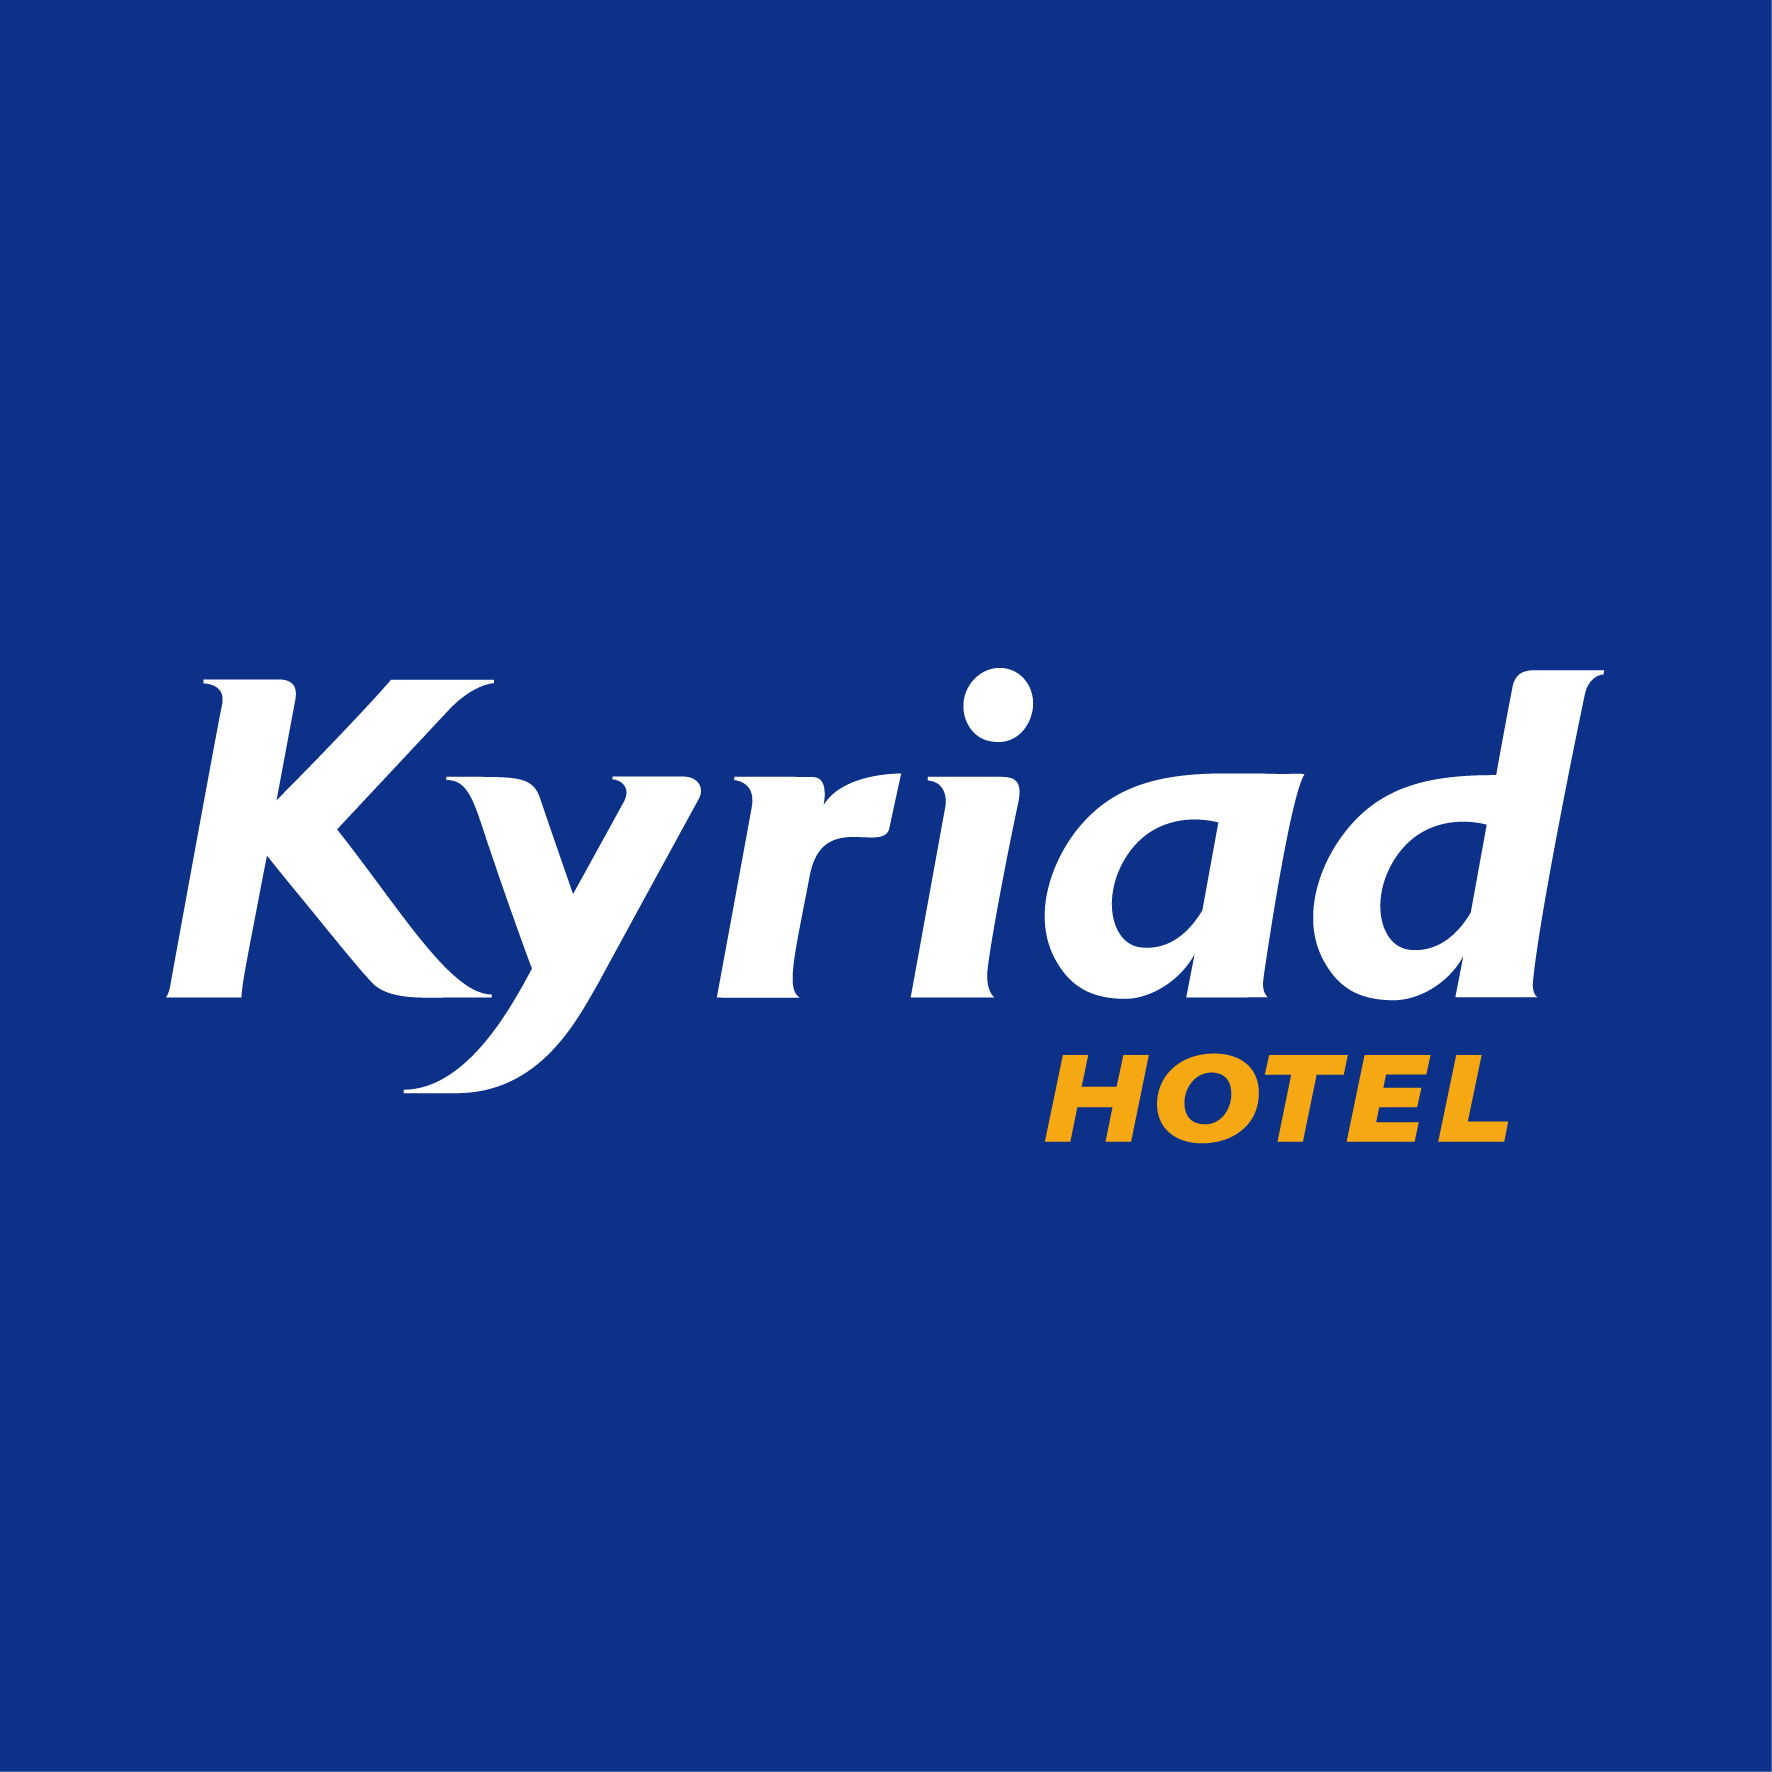 Kyriad Hotel Brand Logo